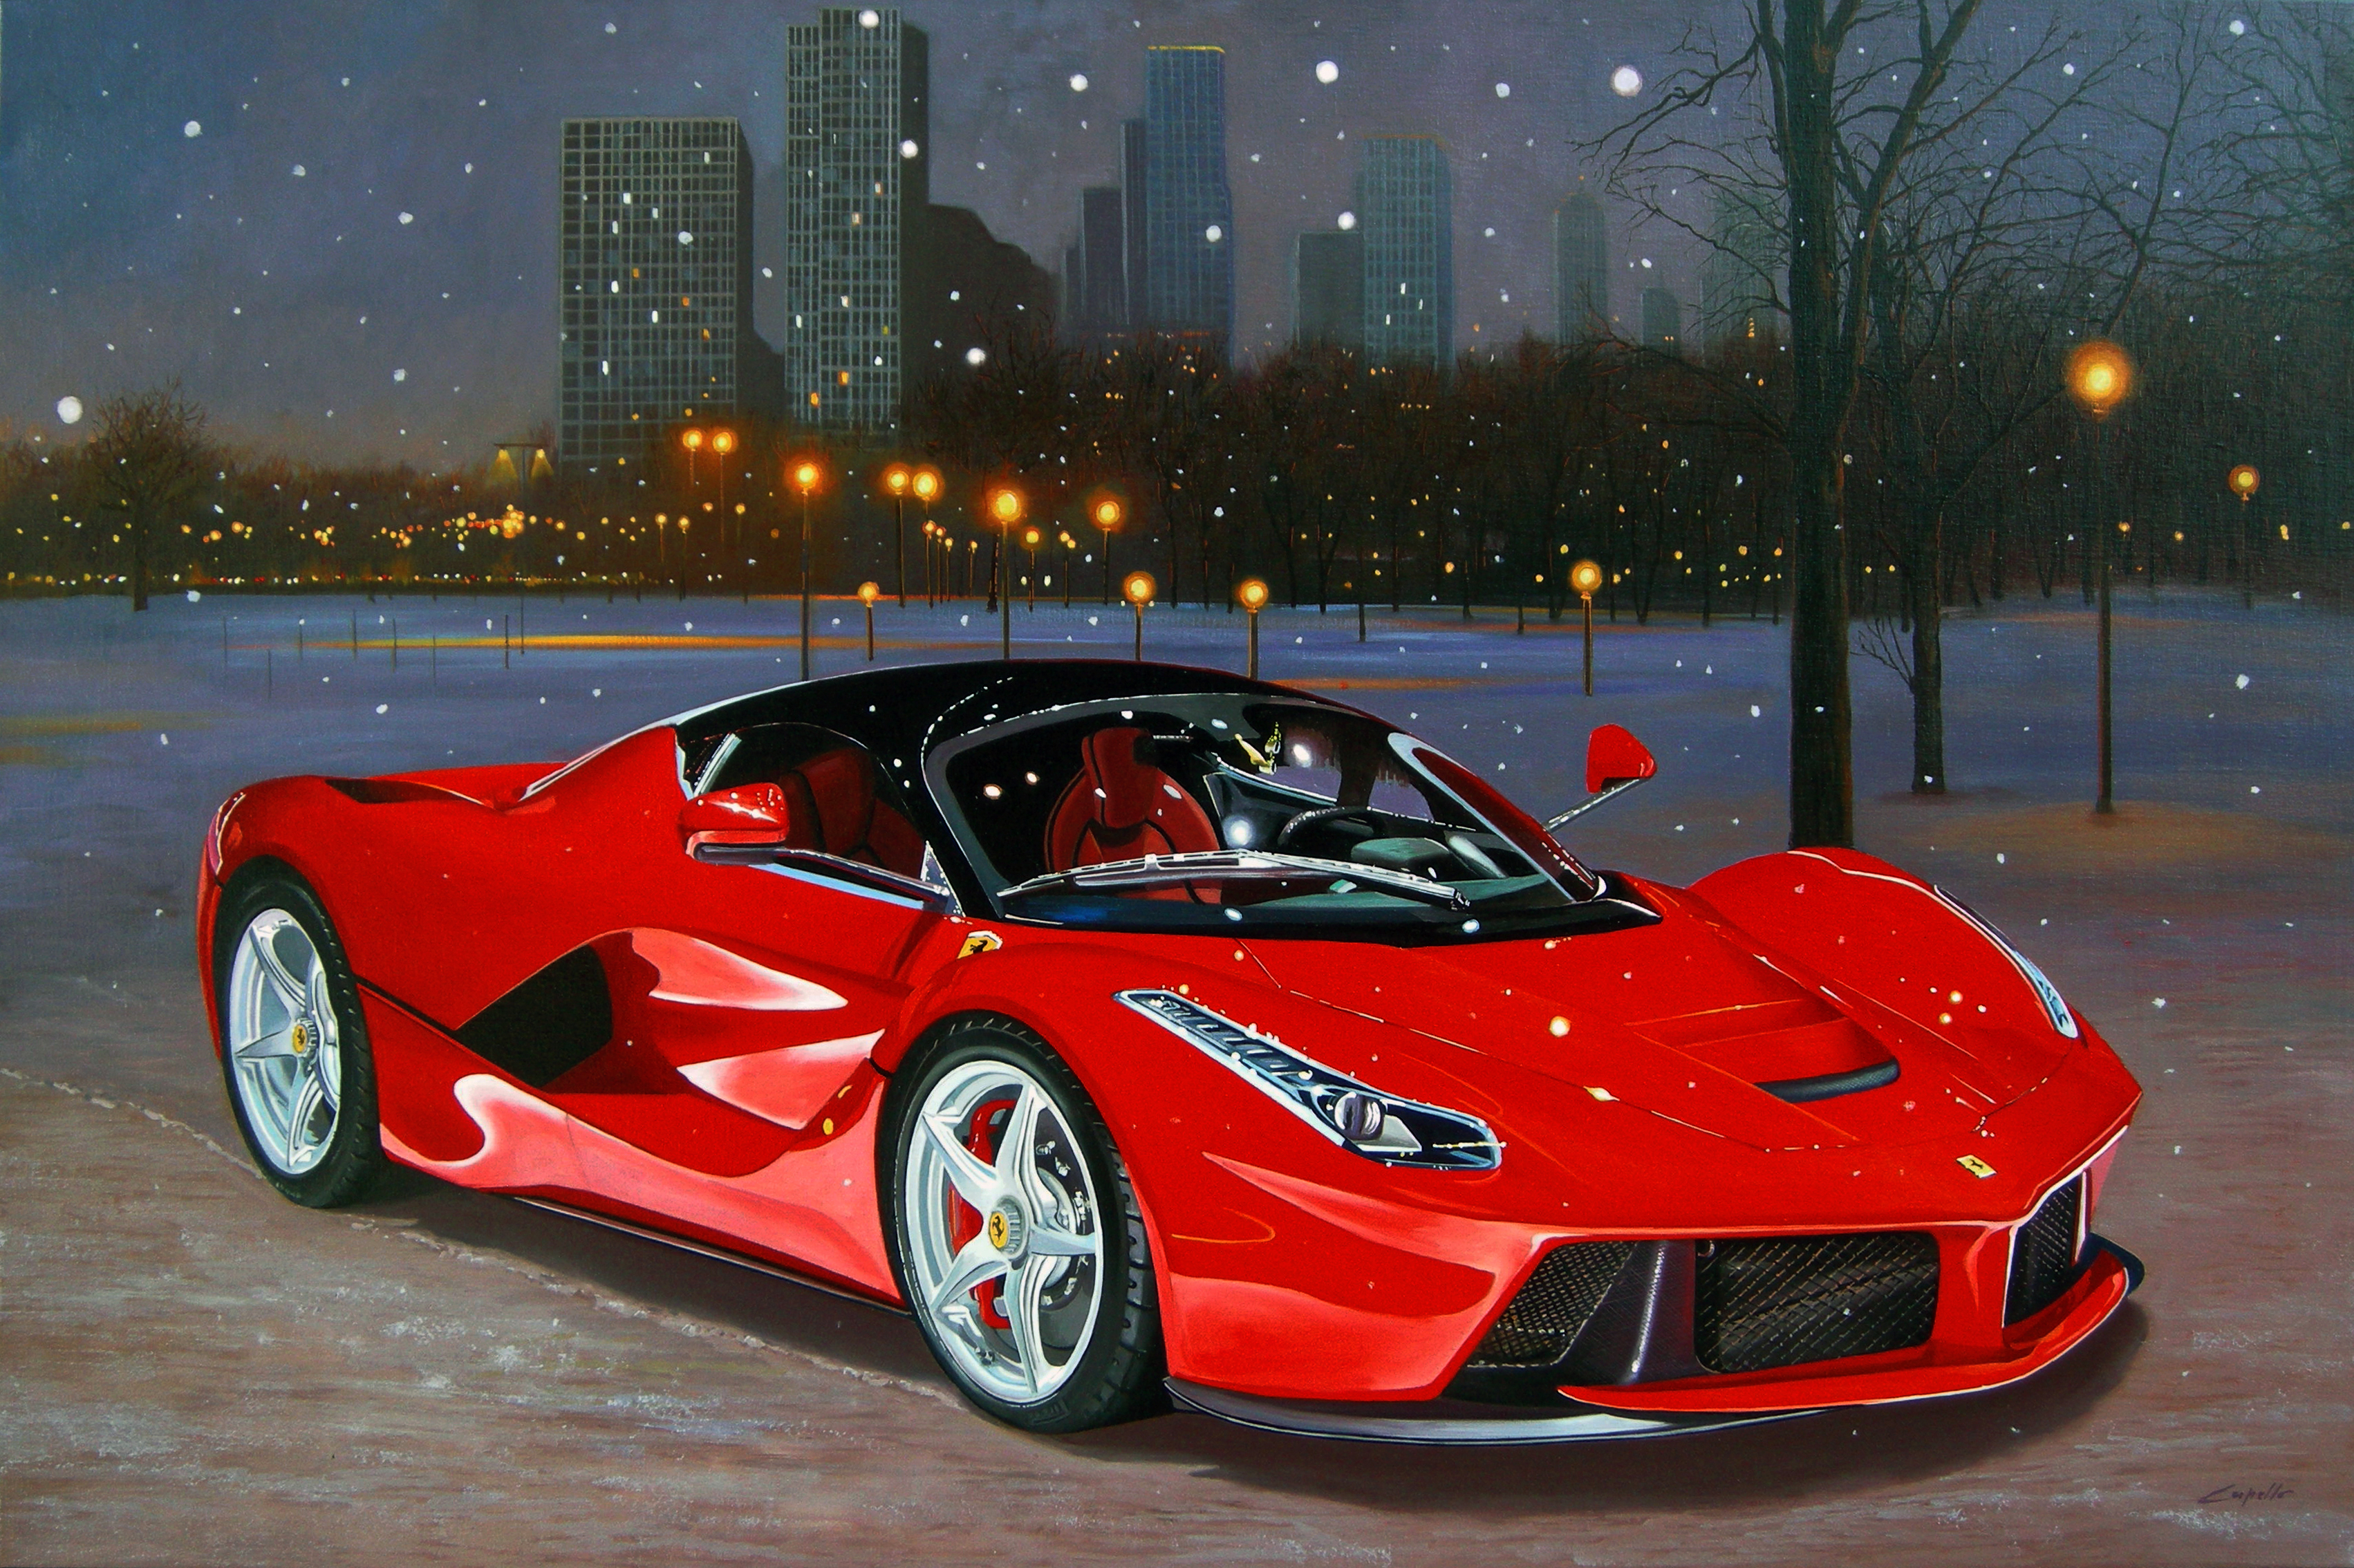 Ferrari at Grants Park Chicago